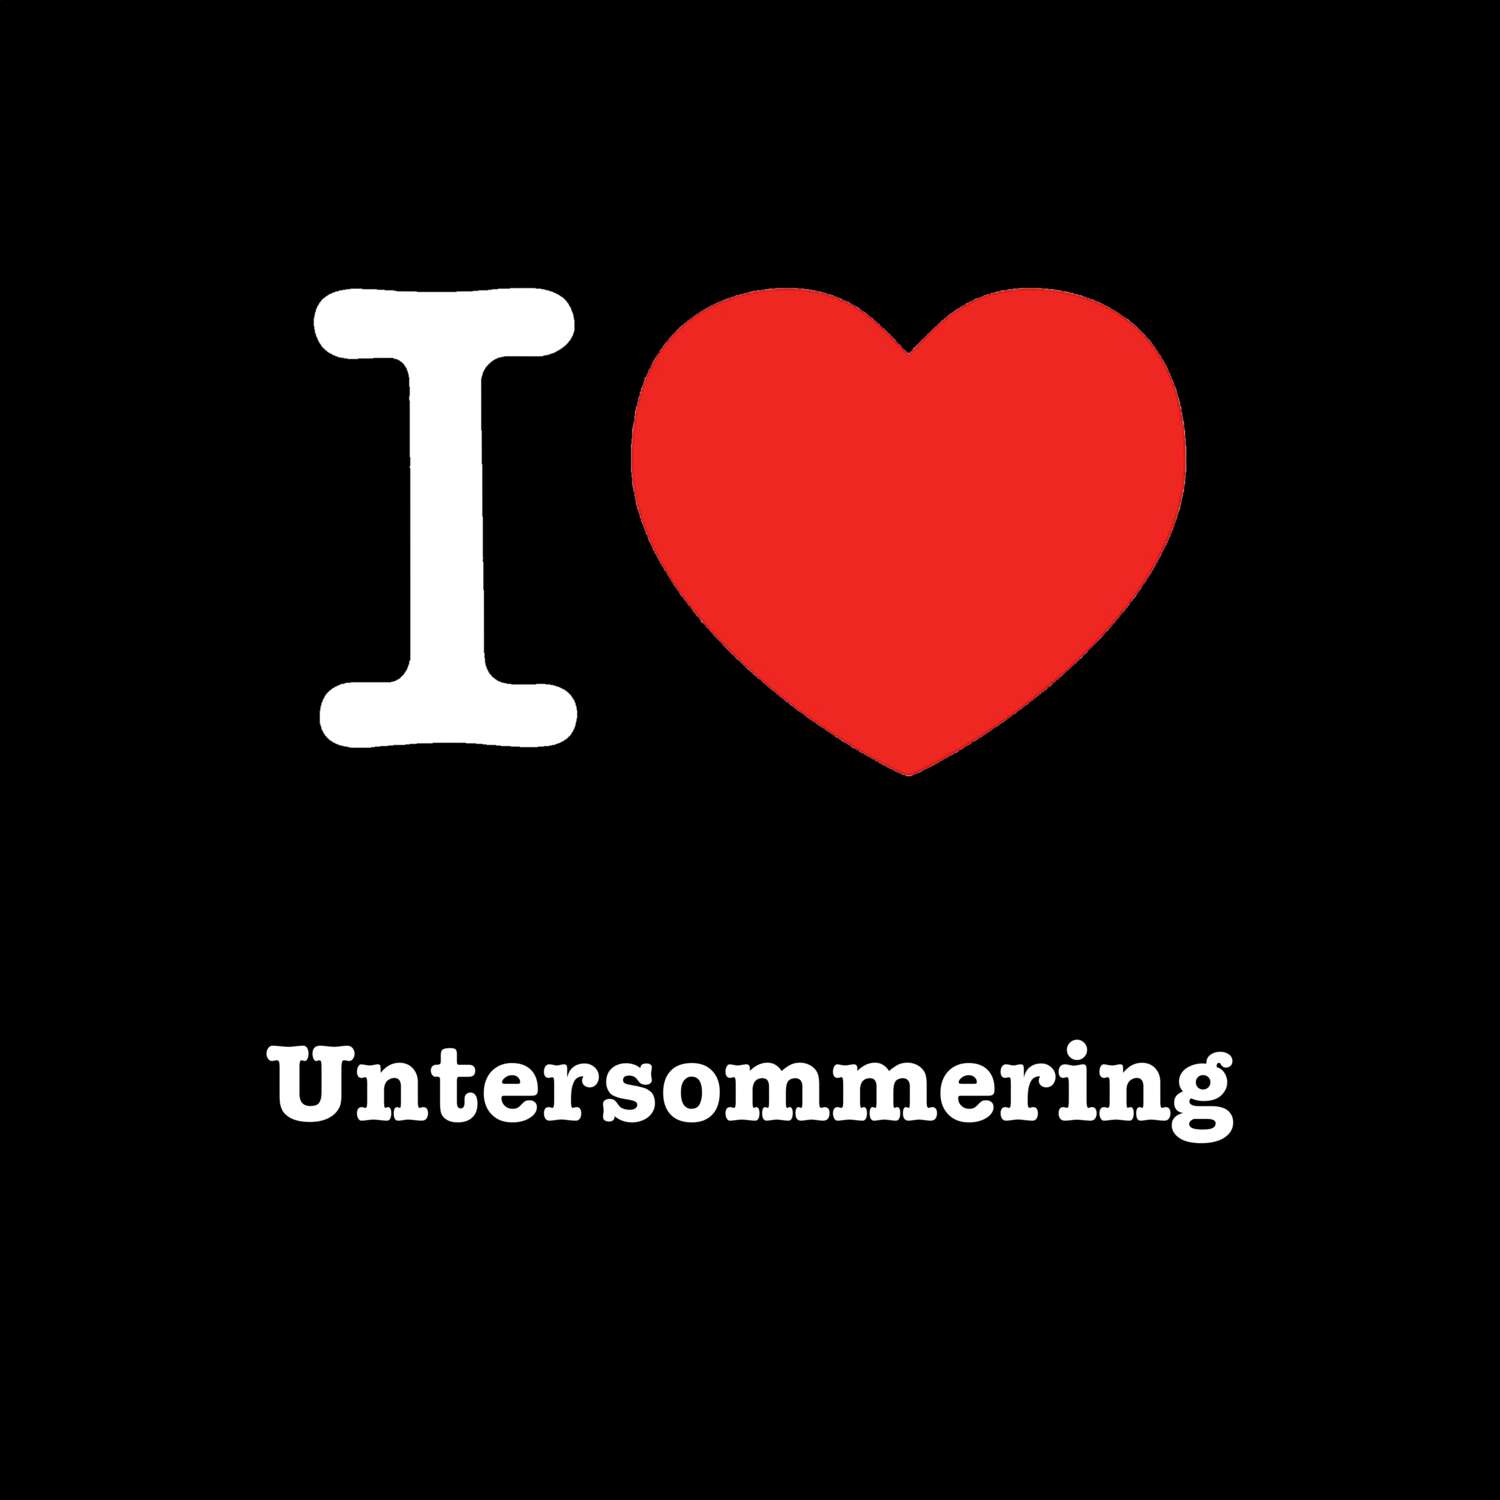 Untersommering T-Shirt »I love«